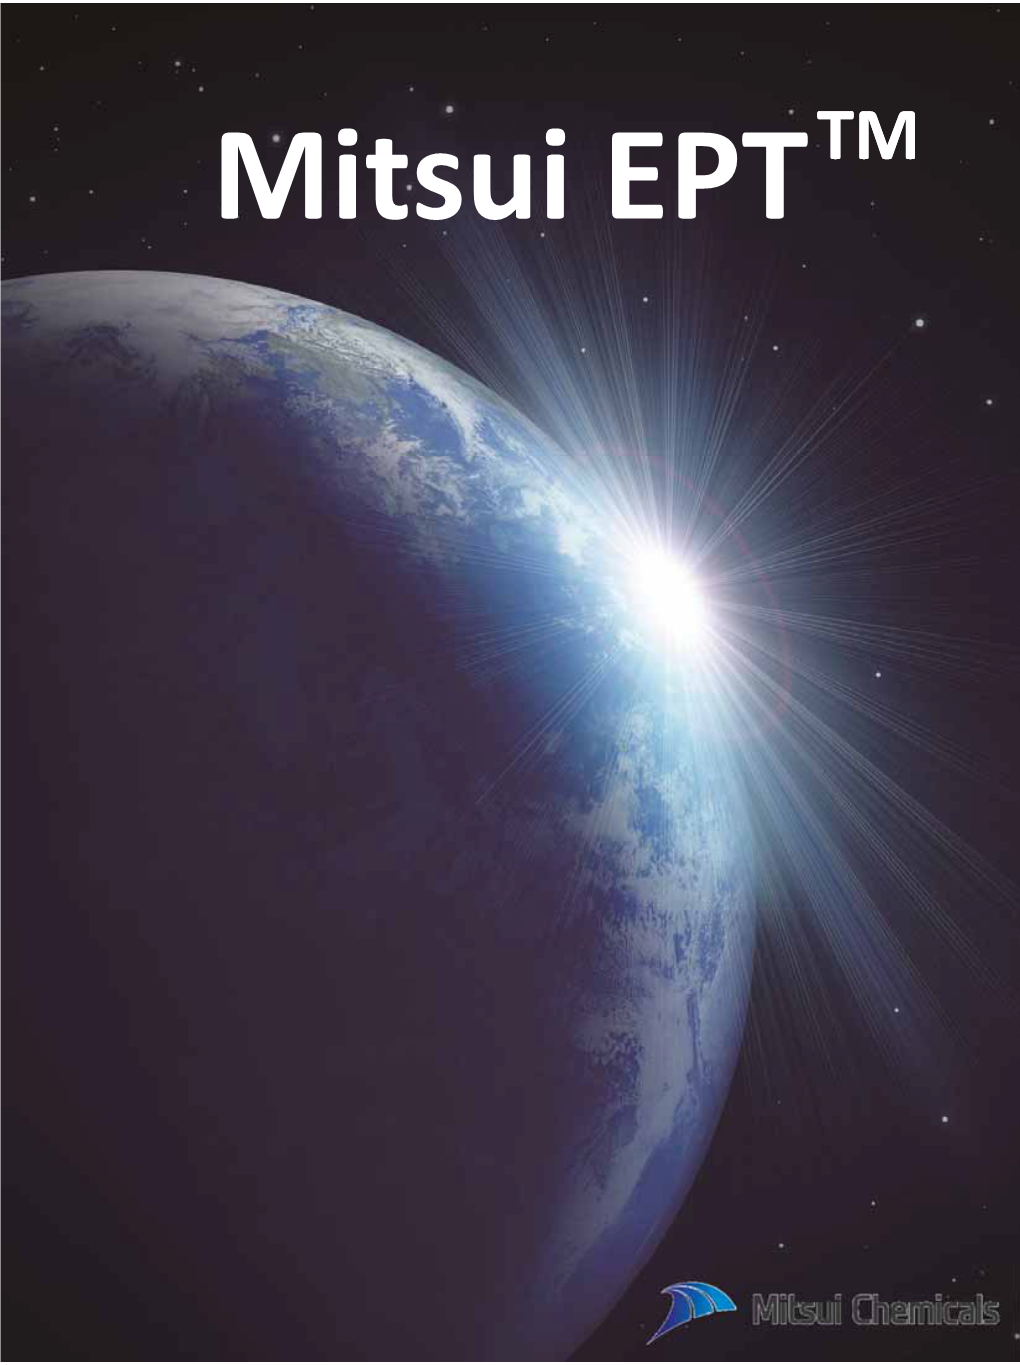 Mitsui EPTTMTM